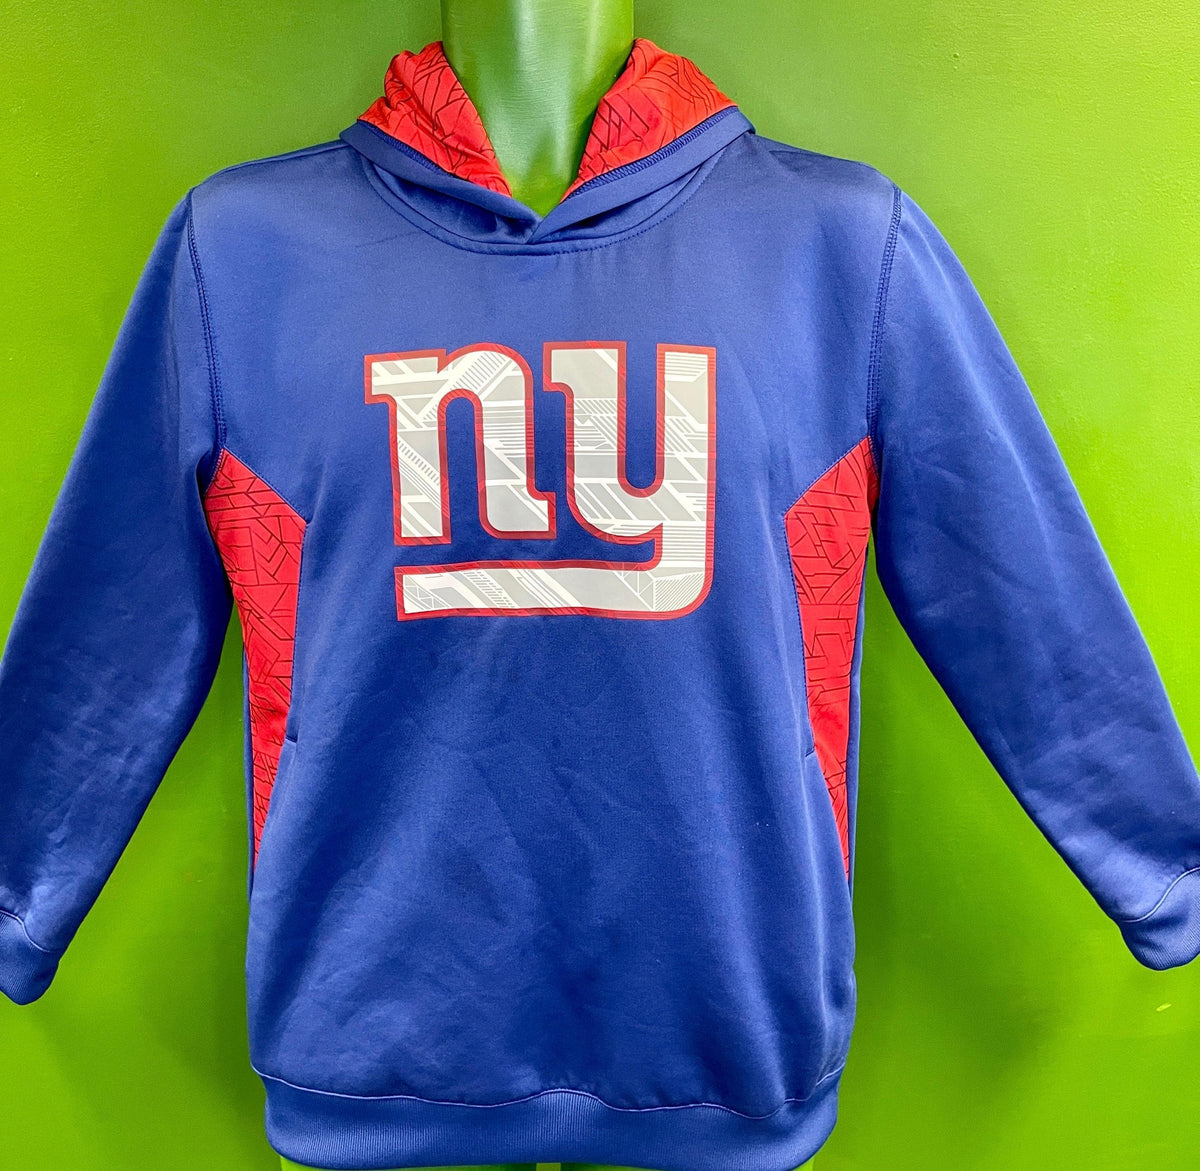 NFL New York Giants Pullover Hoodie Sweatshirt Youth Large 14-16